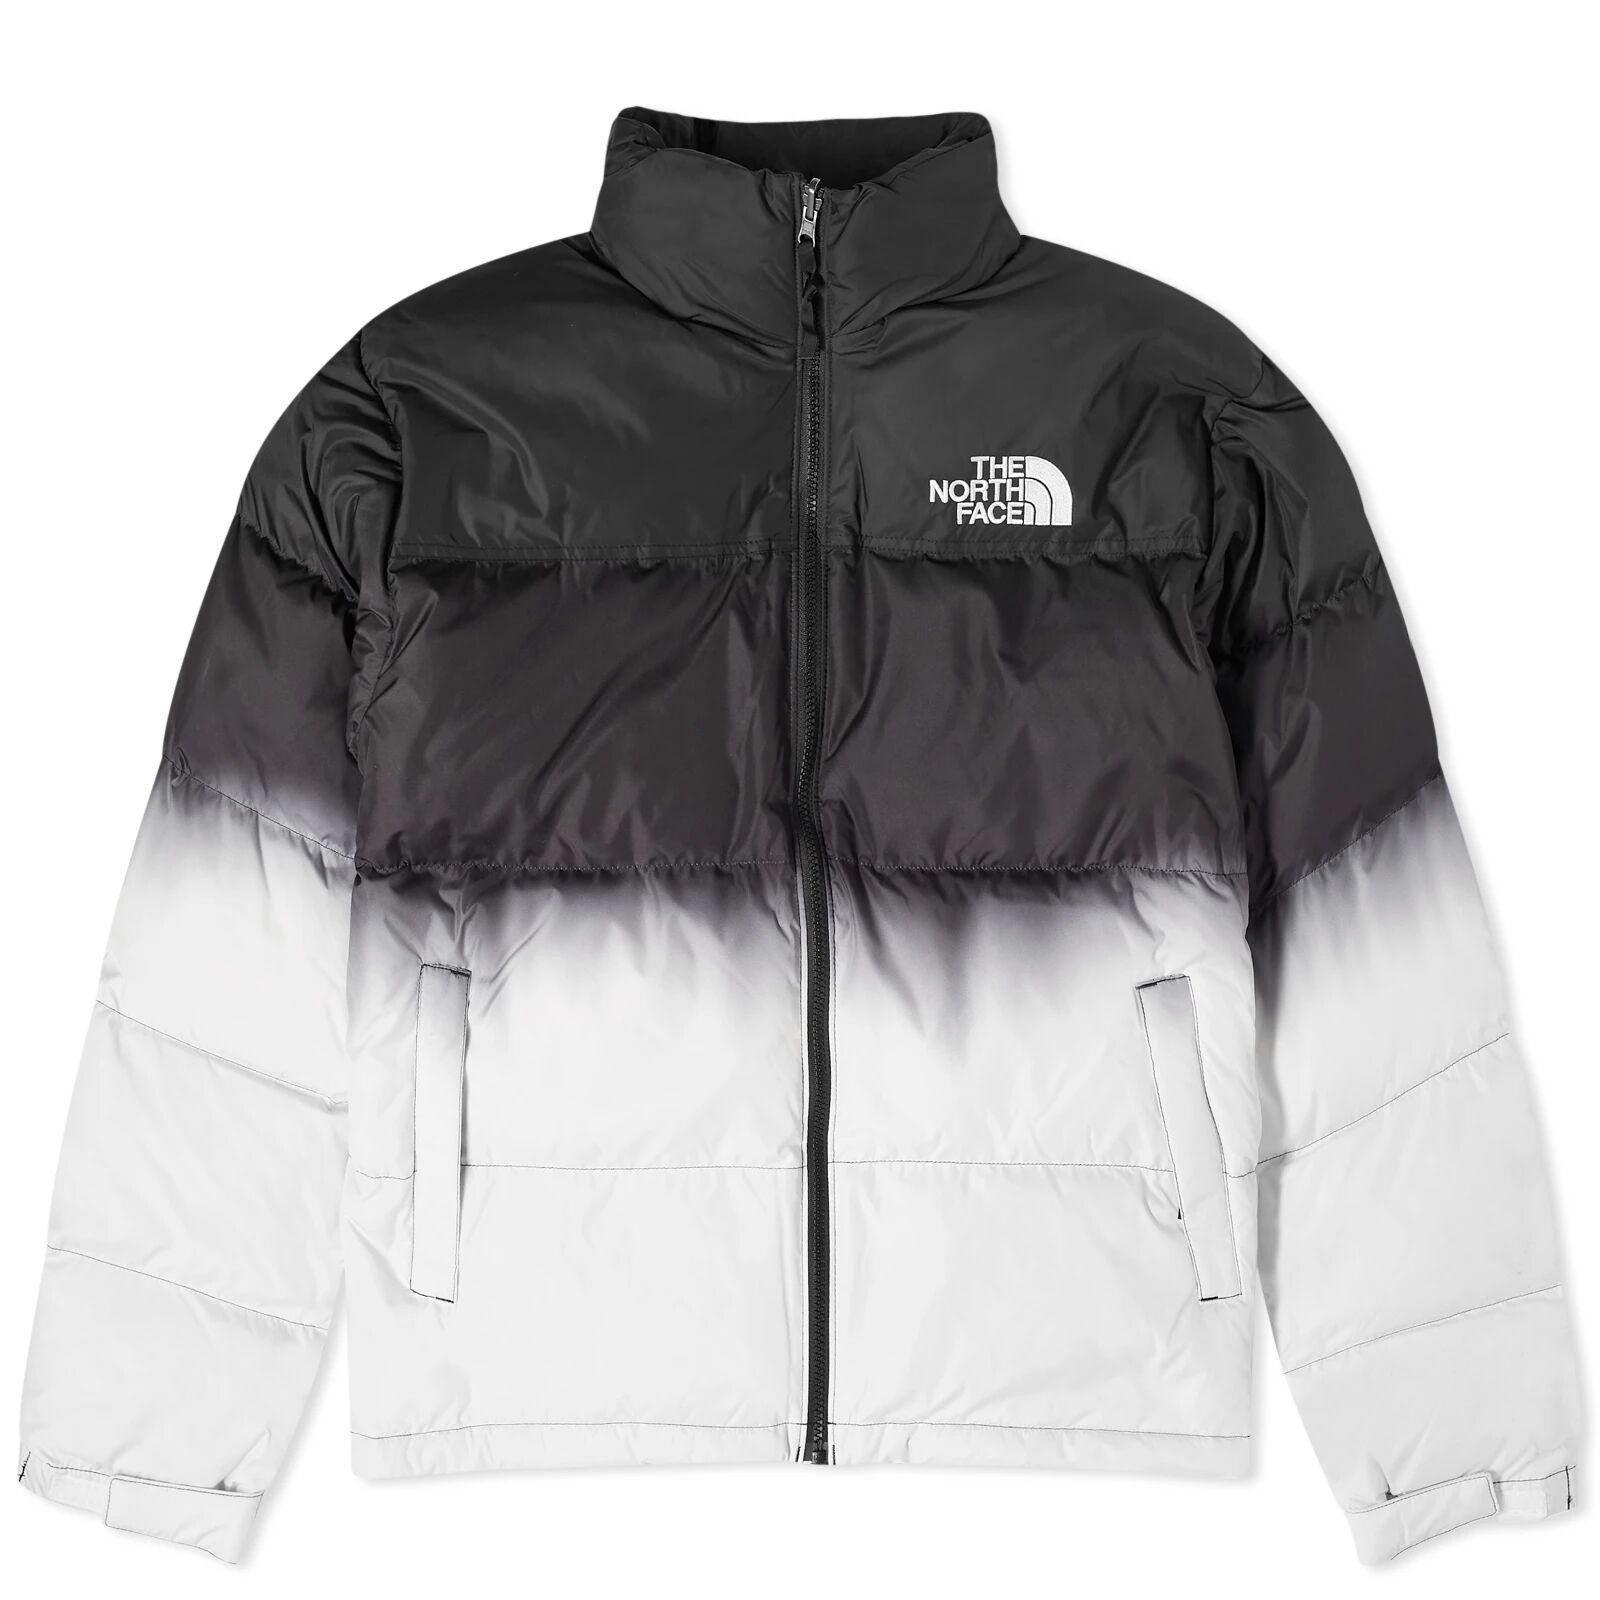 The North Face Men's 96 Nuptse Dip Dye Jacket in Tnf Black Dip Dye, Size X-Large